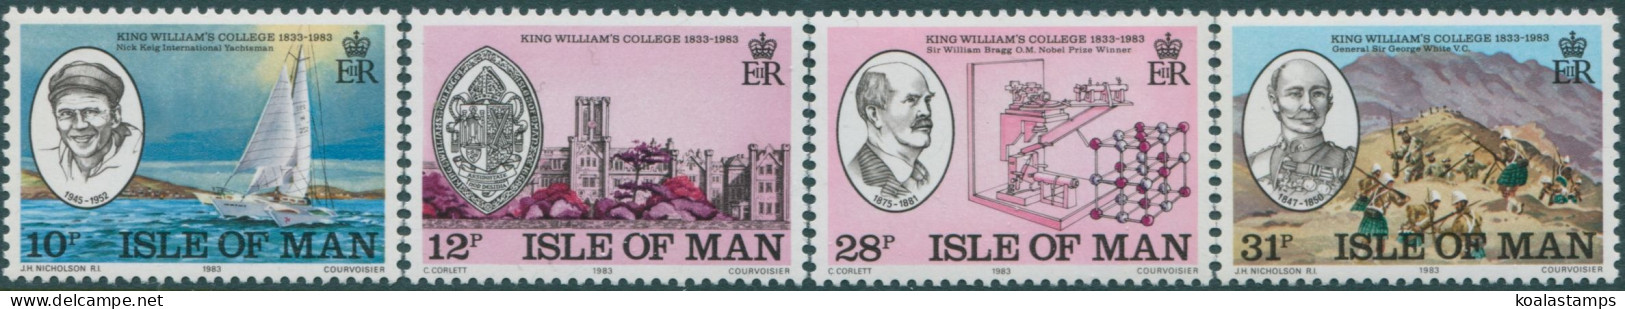 Isle Of Man 1983 SG251-254 King William College Set MNH - Isla De Man